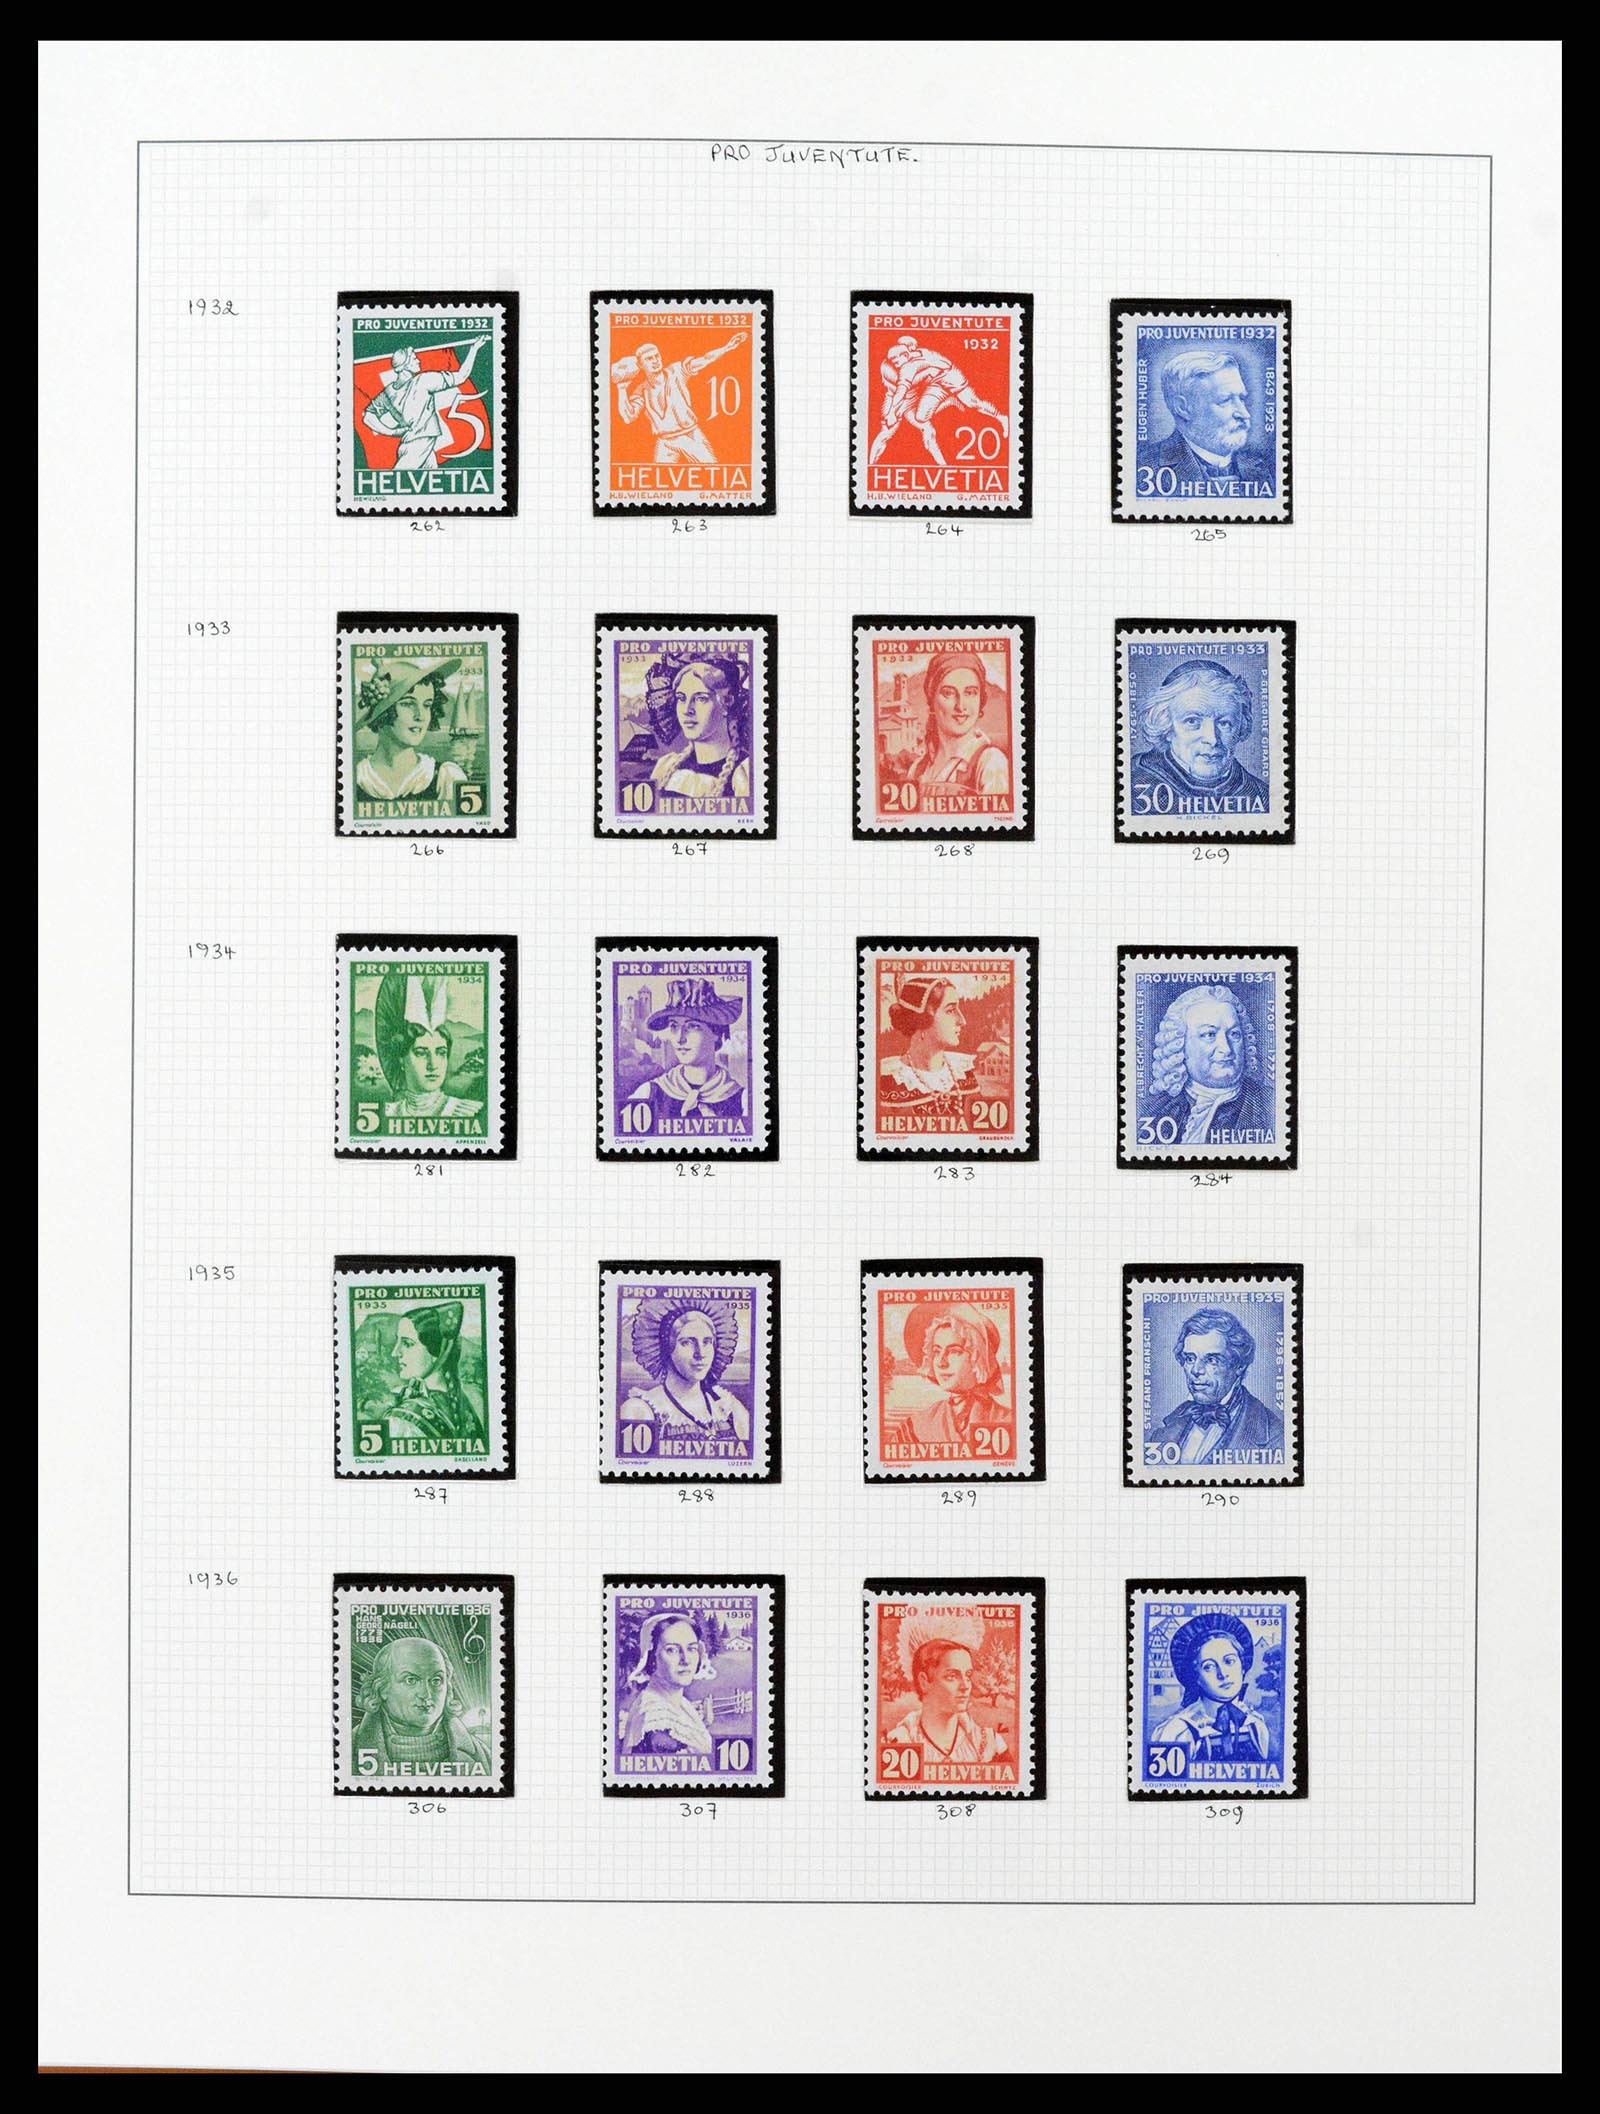 38558 0058 - Stamp collection 38558 Switzerland 1854-1960.